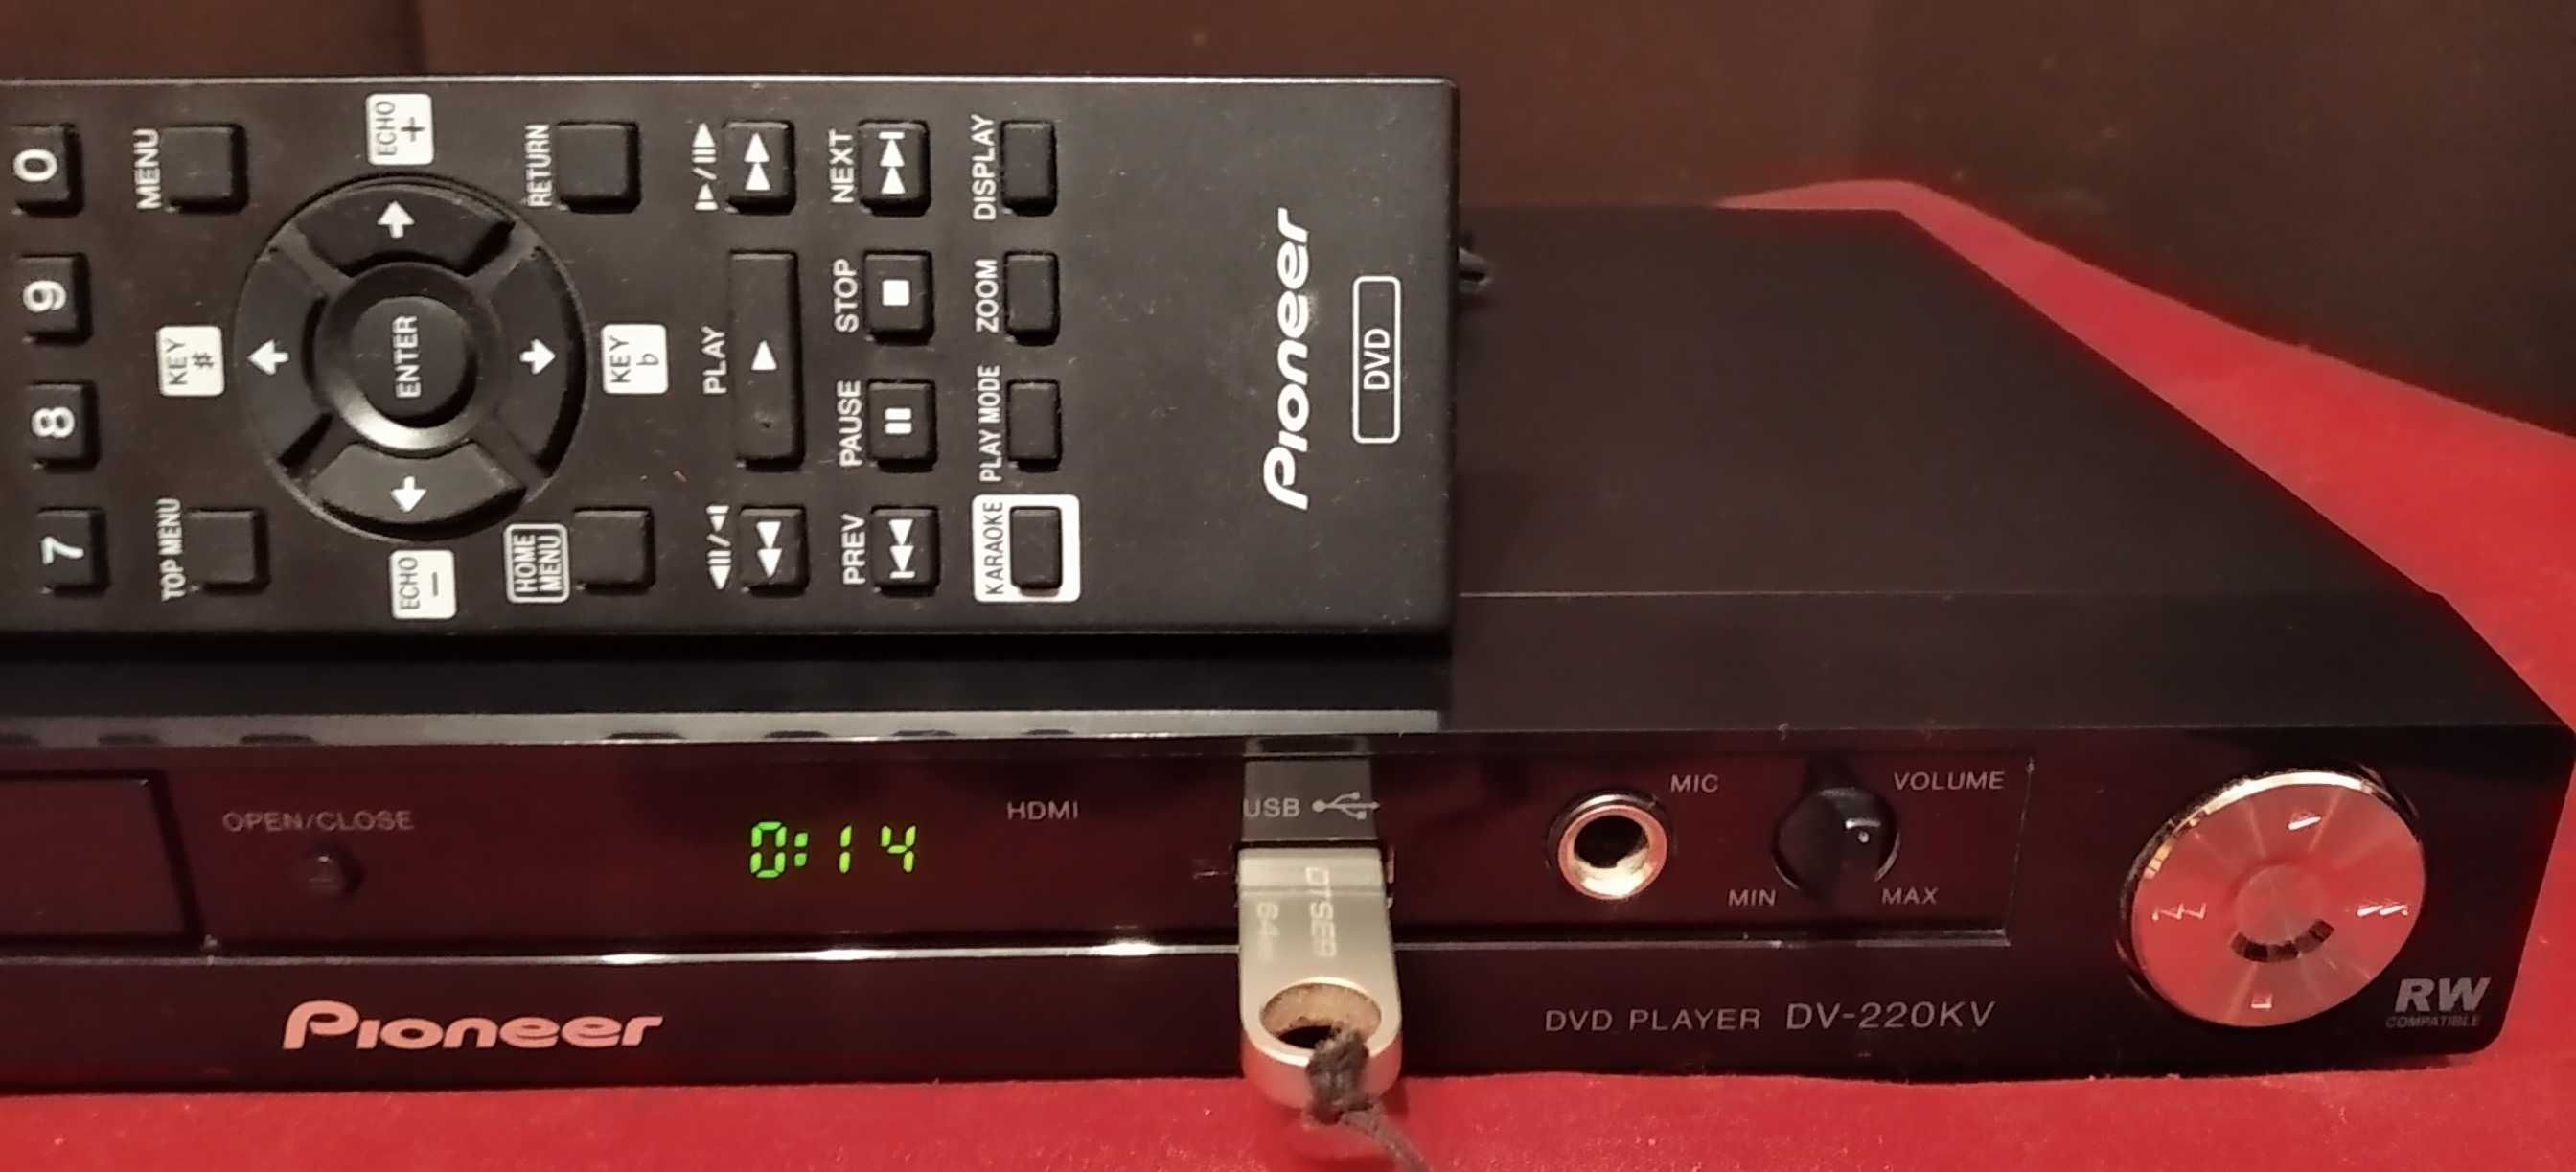 DVD PIONEER DV-220 KV-K видеоплеер